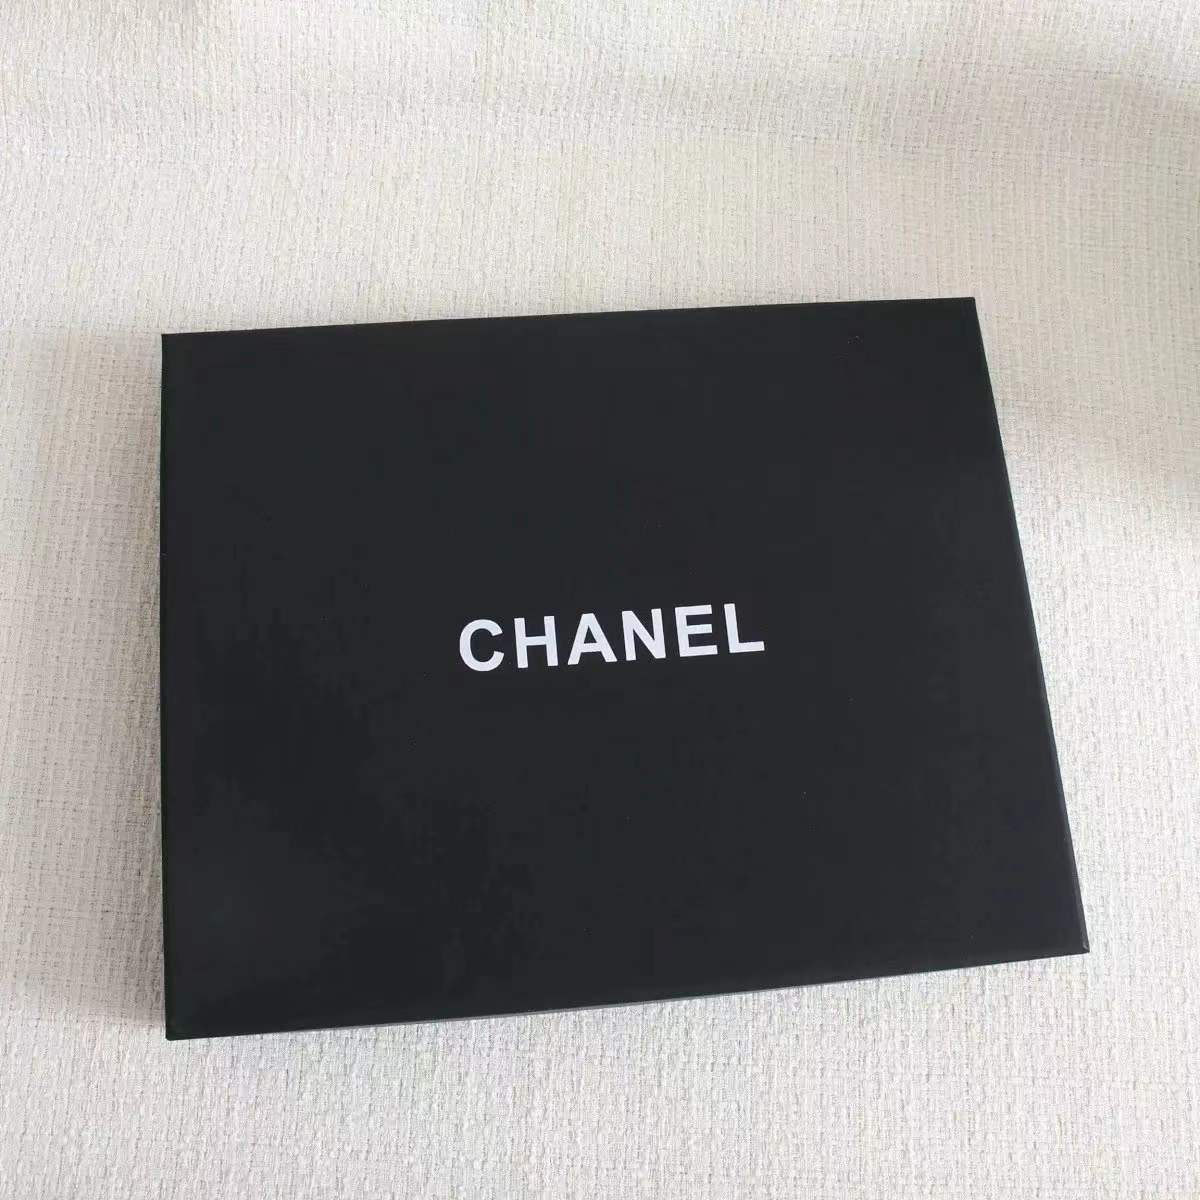 1:1 Chanel long necklace box 1pcs